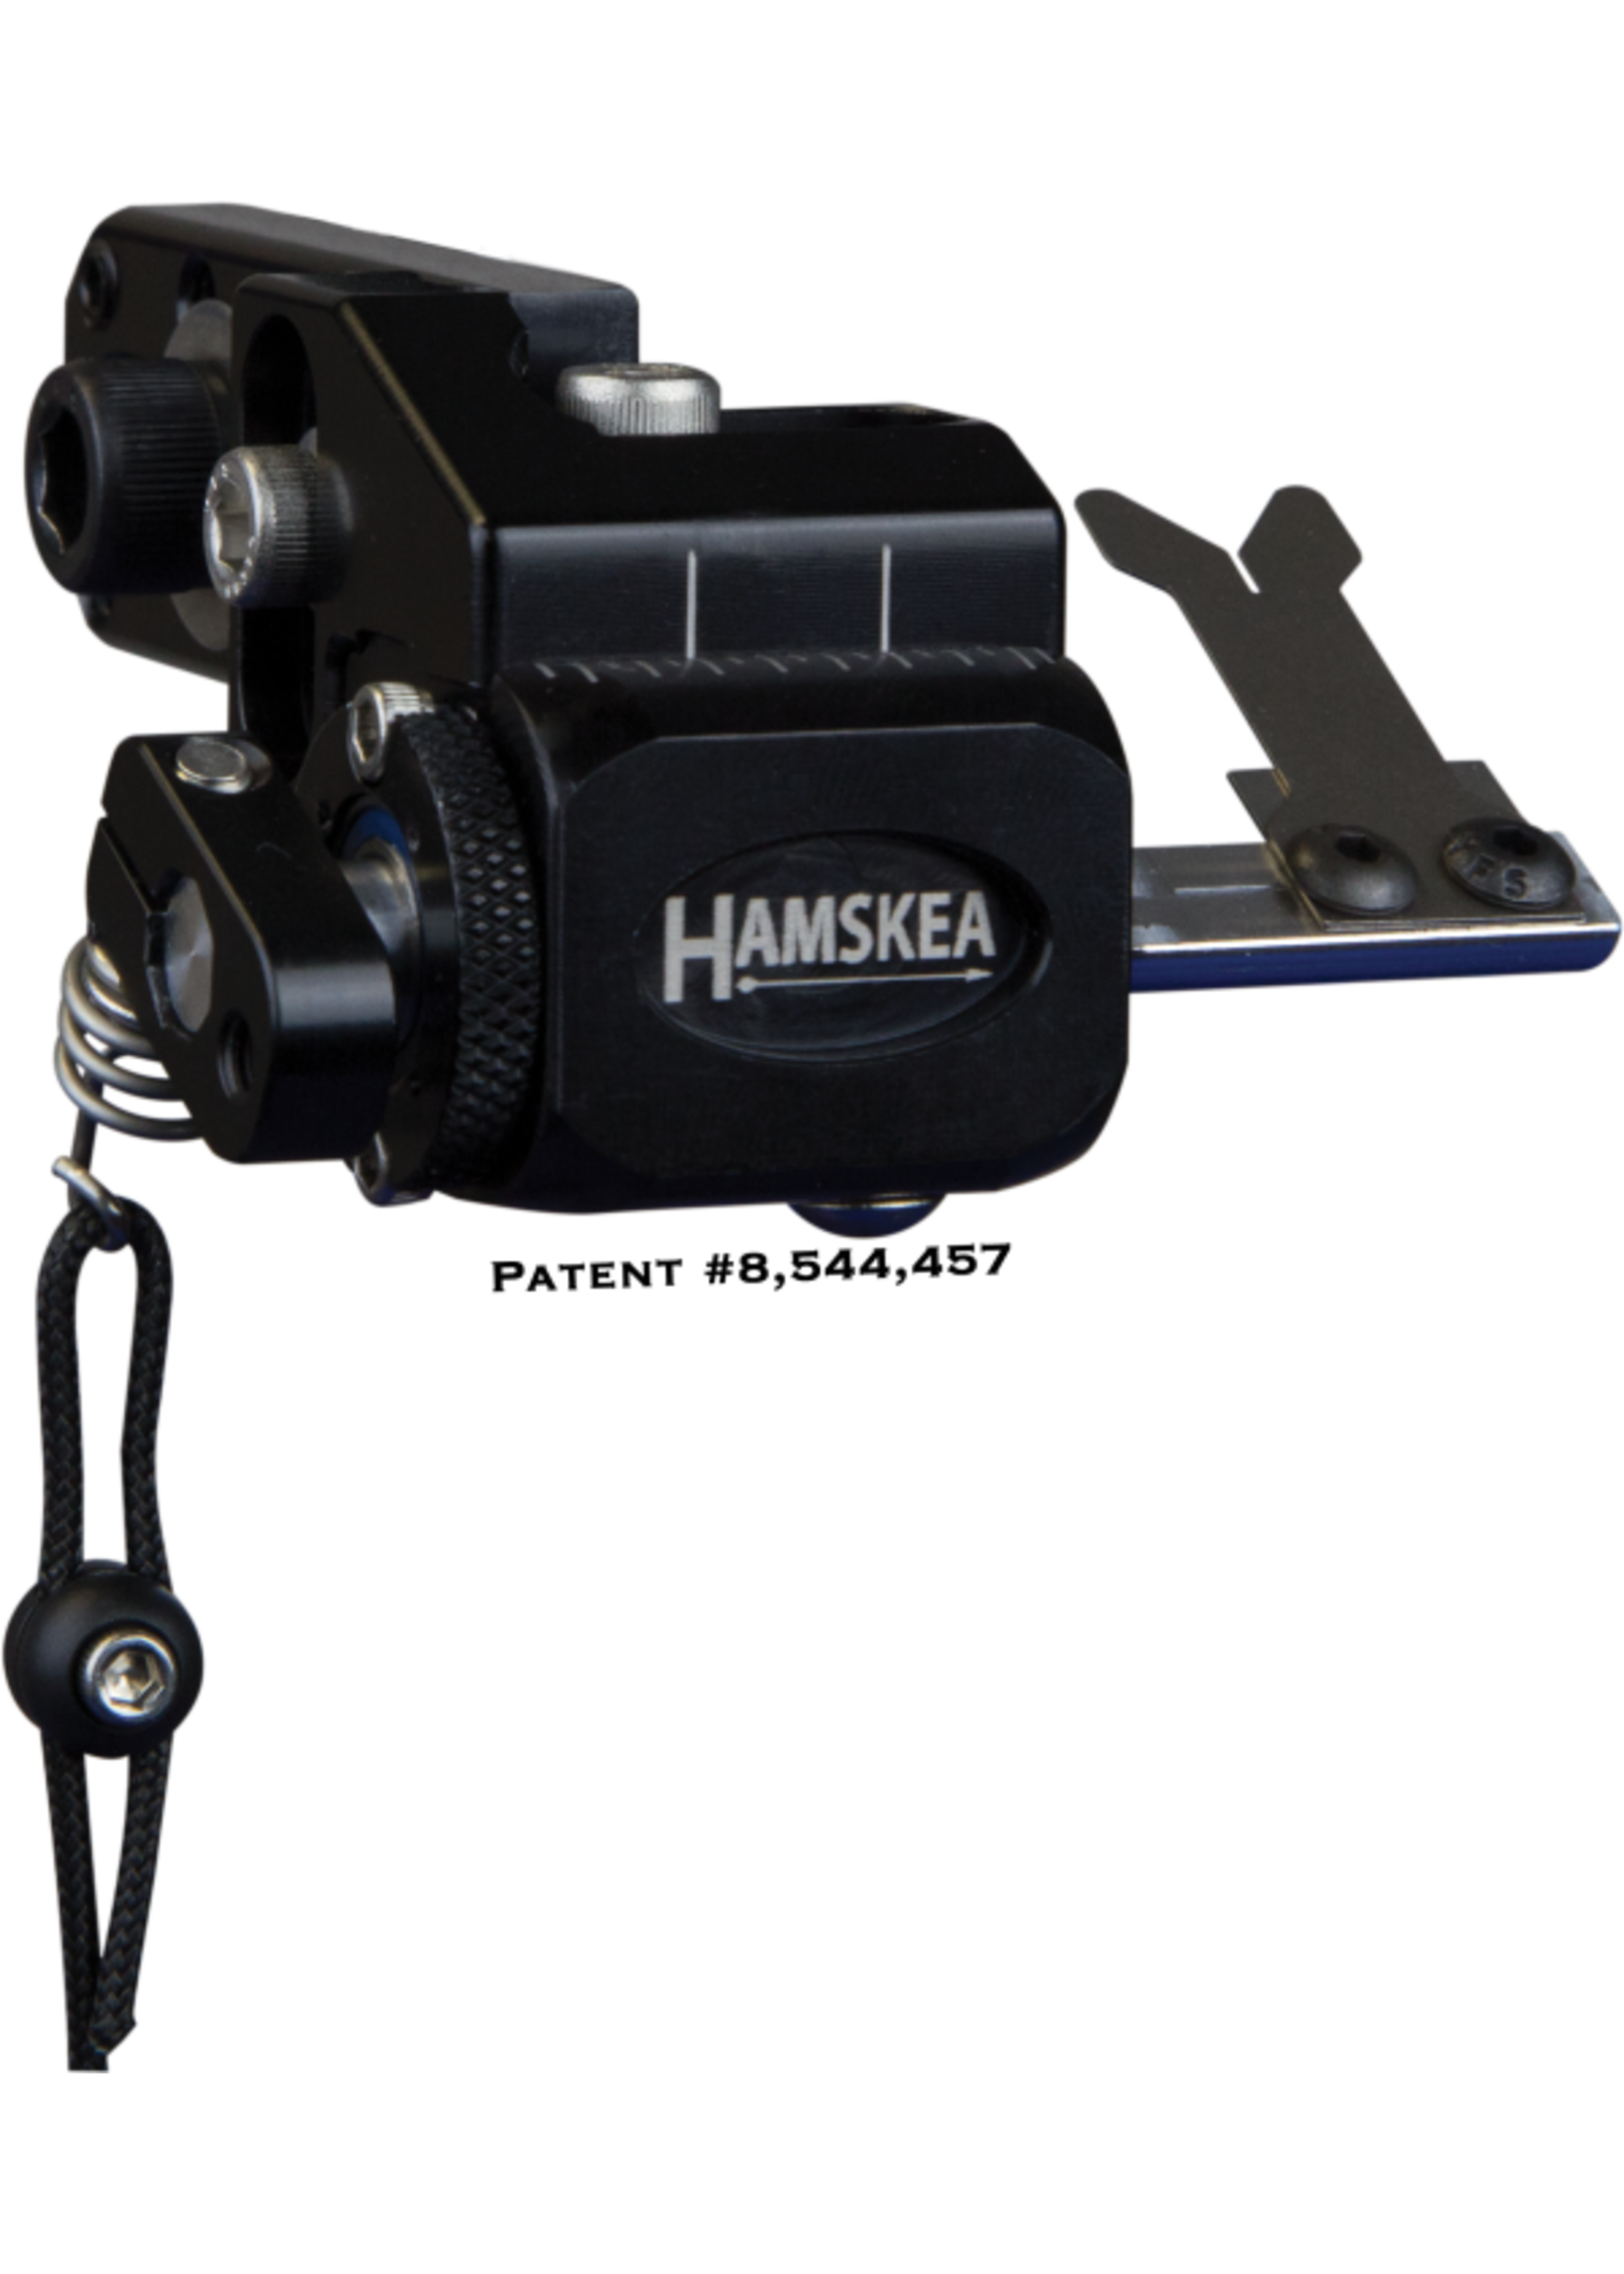 Hamskea hybrid target pro rest standard, lh, black